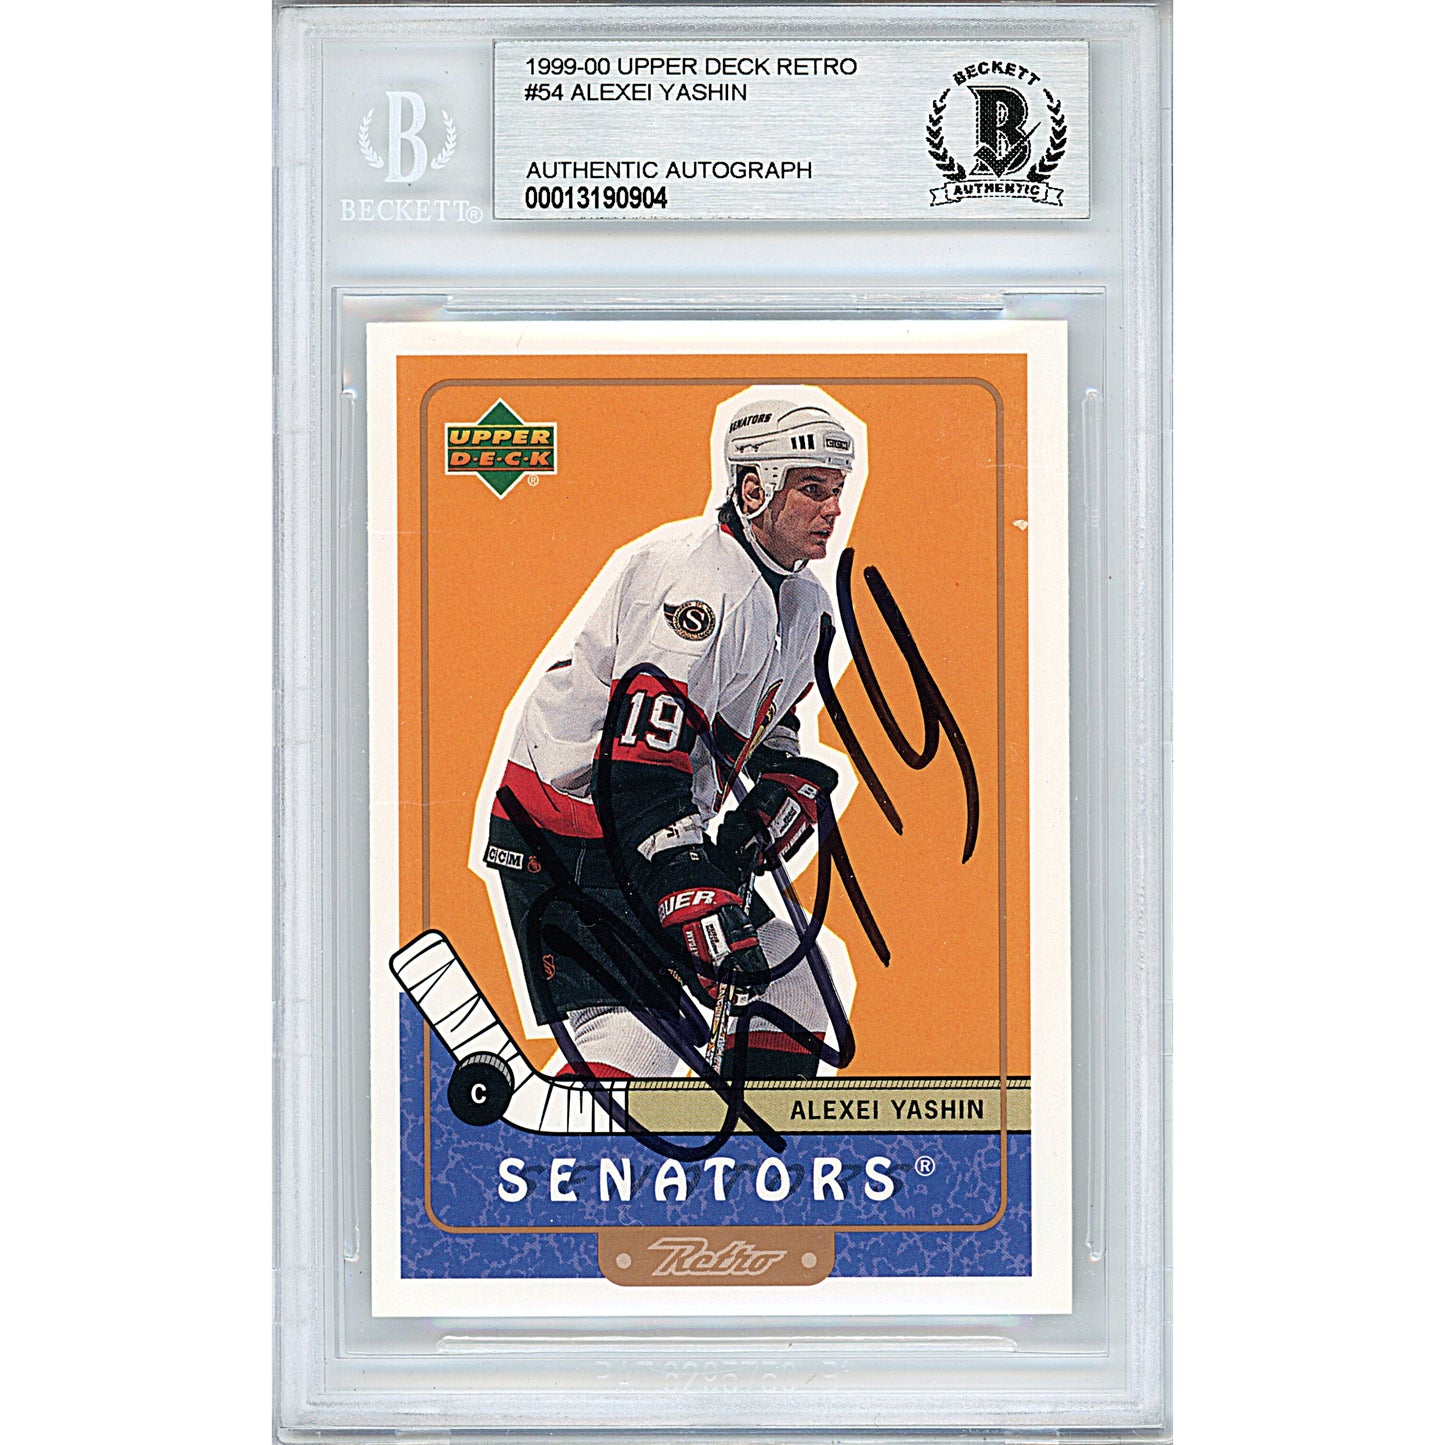 Hockey- Autographed- Alexei Yashin Signed Ottawa Senators 1999-2000 Upper Deck Retro Hockey Card Beckett BAS Slabbed 00013190904 - 101